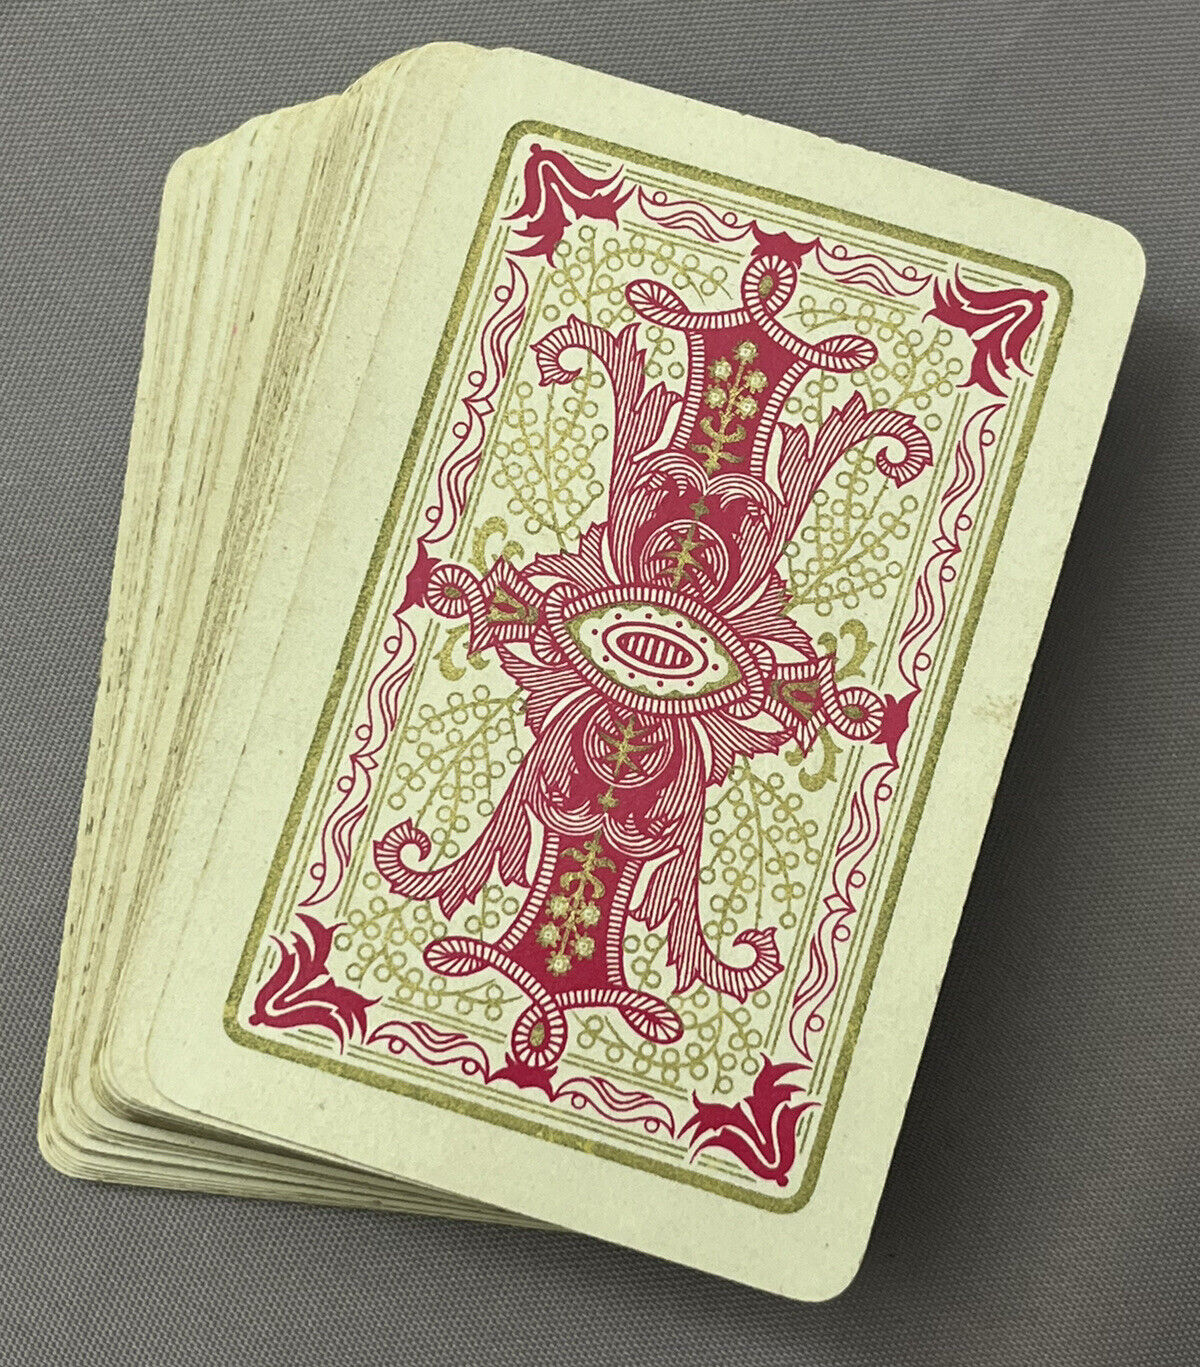 1950s Piatnik Playing Card Deck 52 Cards No Jokers